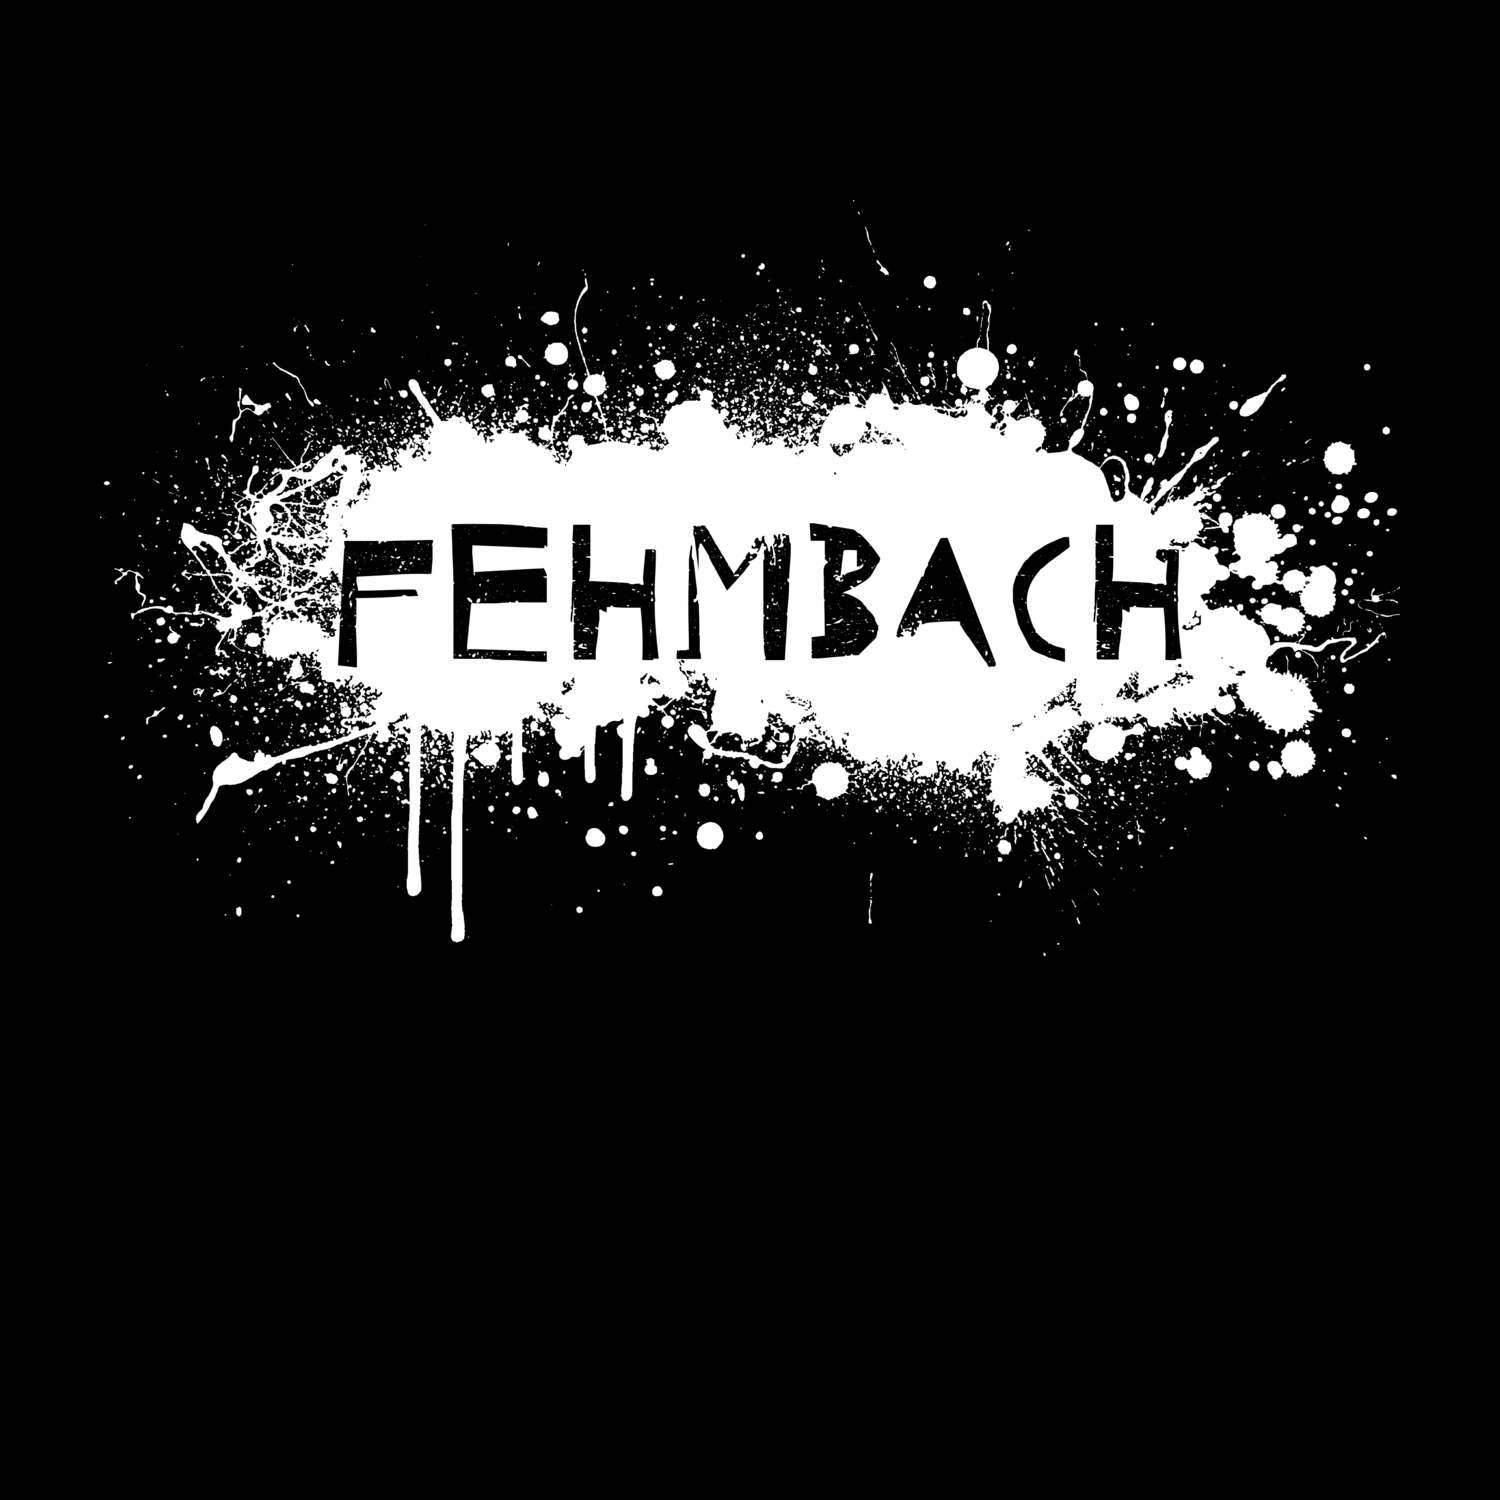 Fehmbach T-Shirt »Paint Splash Punk«